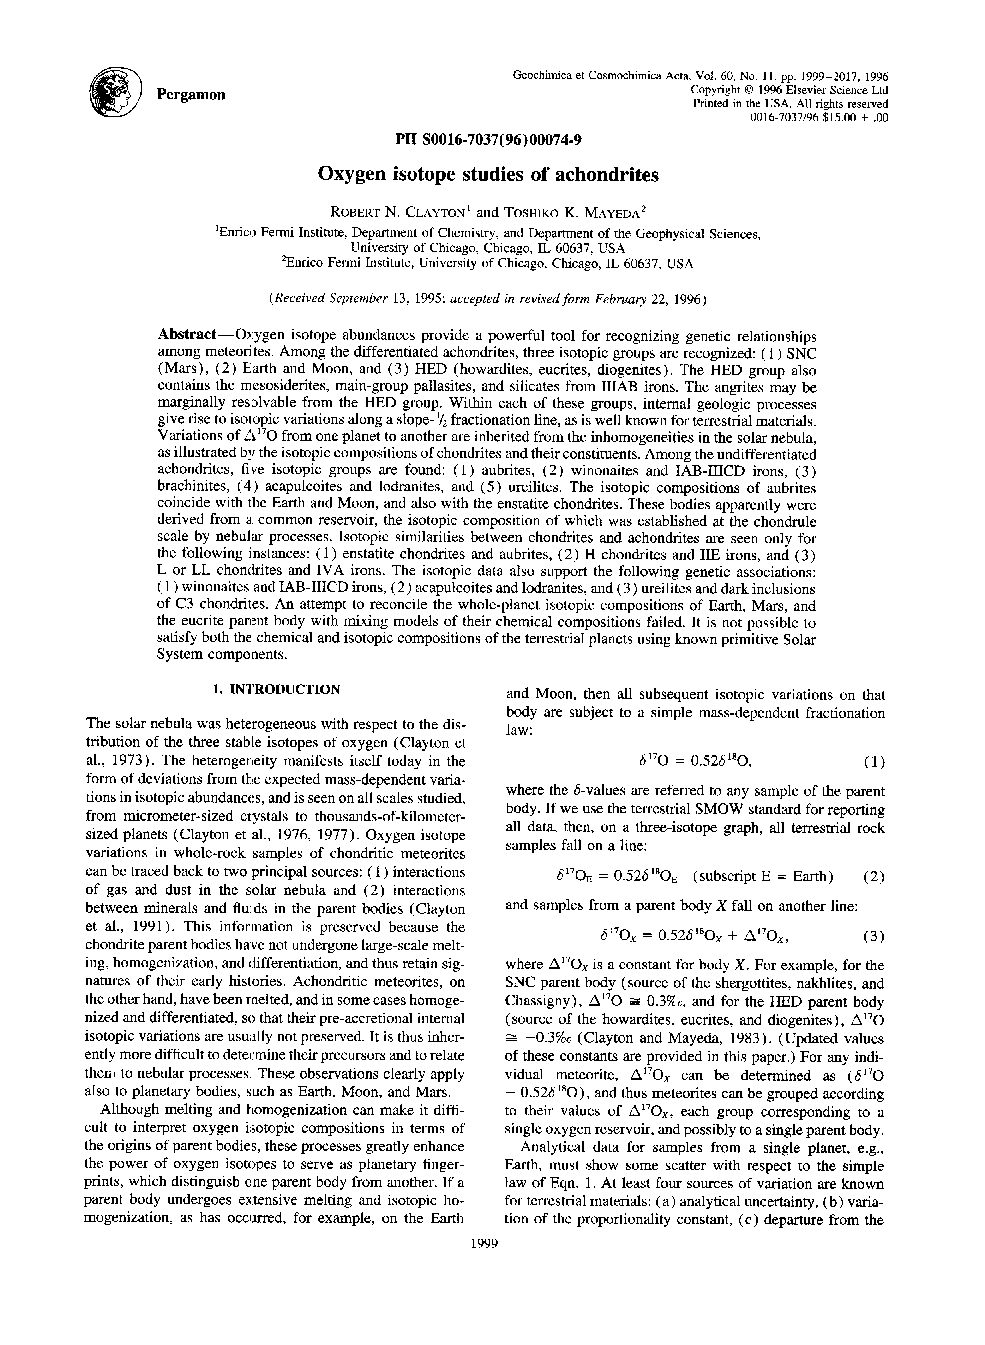 Oxygen isotope studies of achondrites